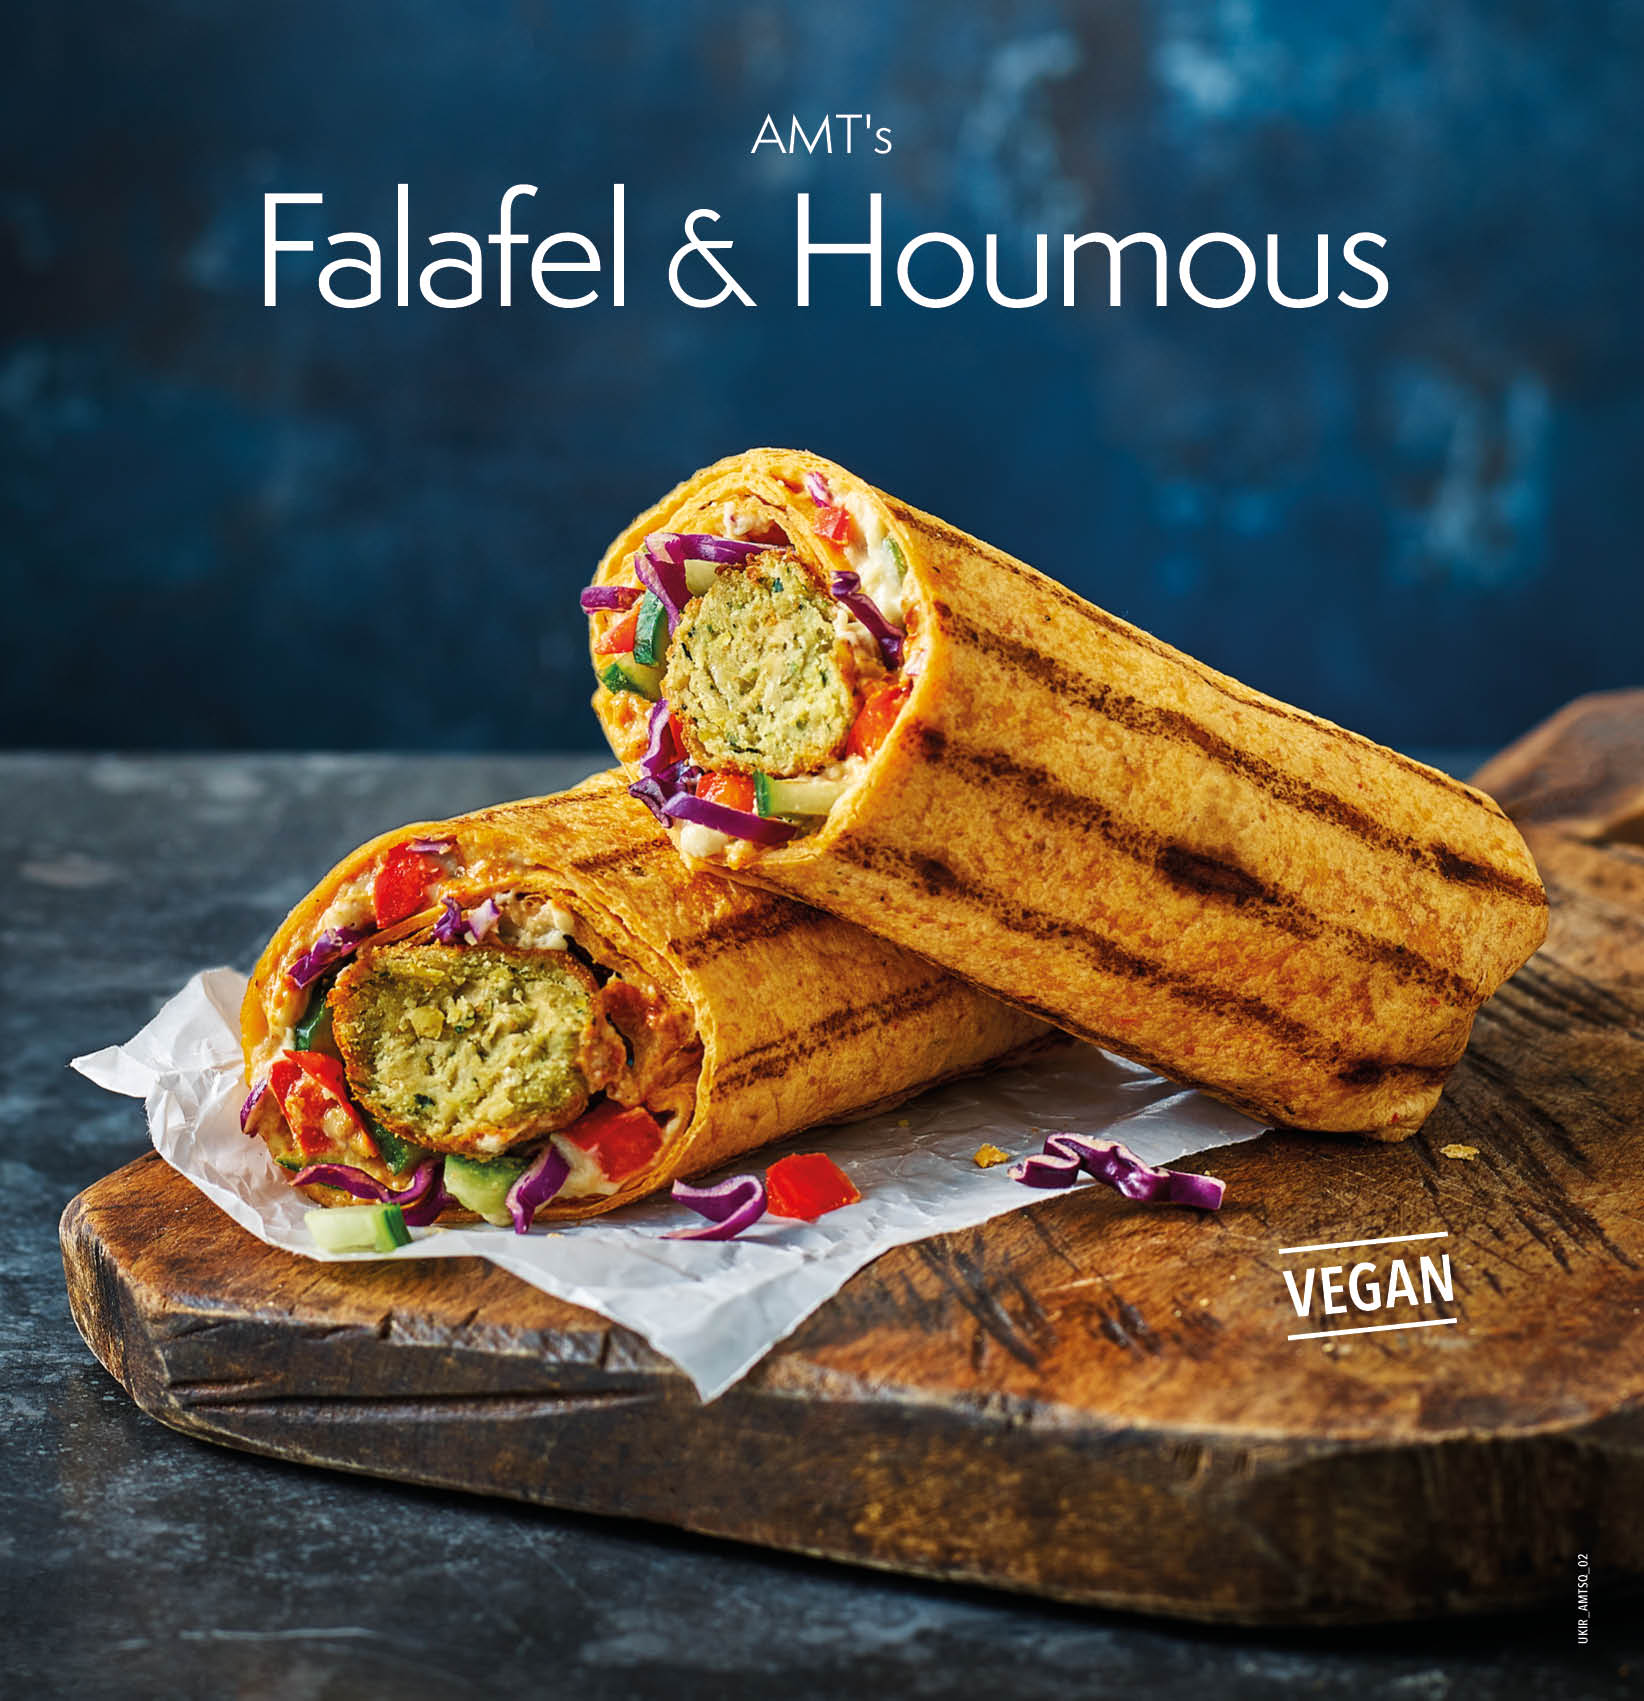 AMT's Falafel and Houmous